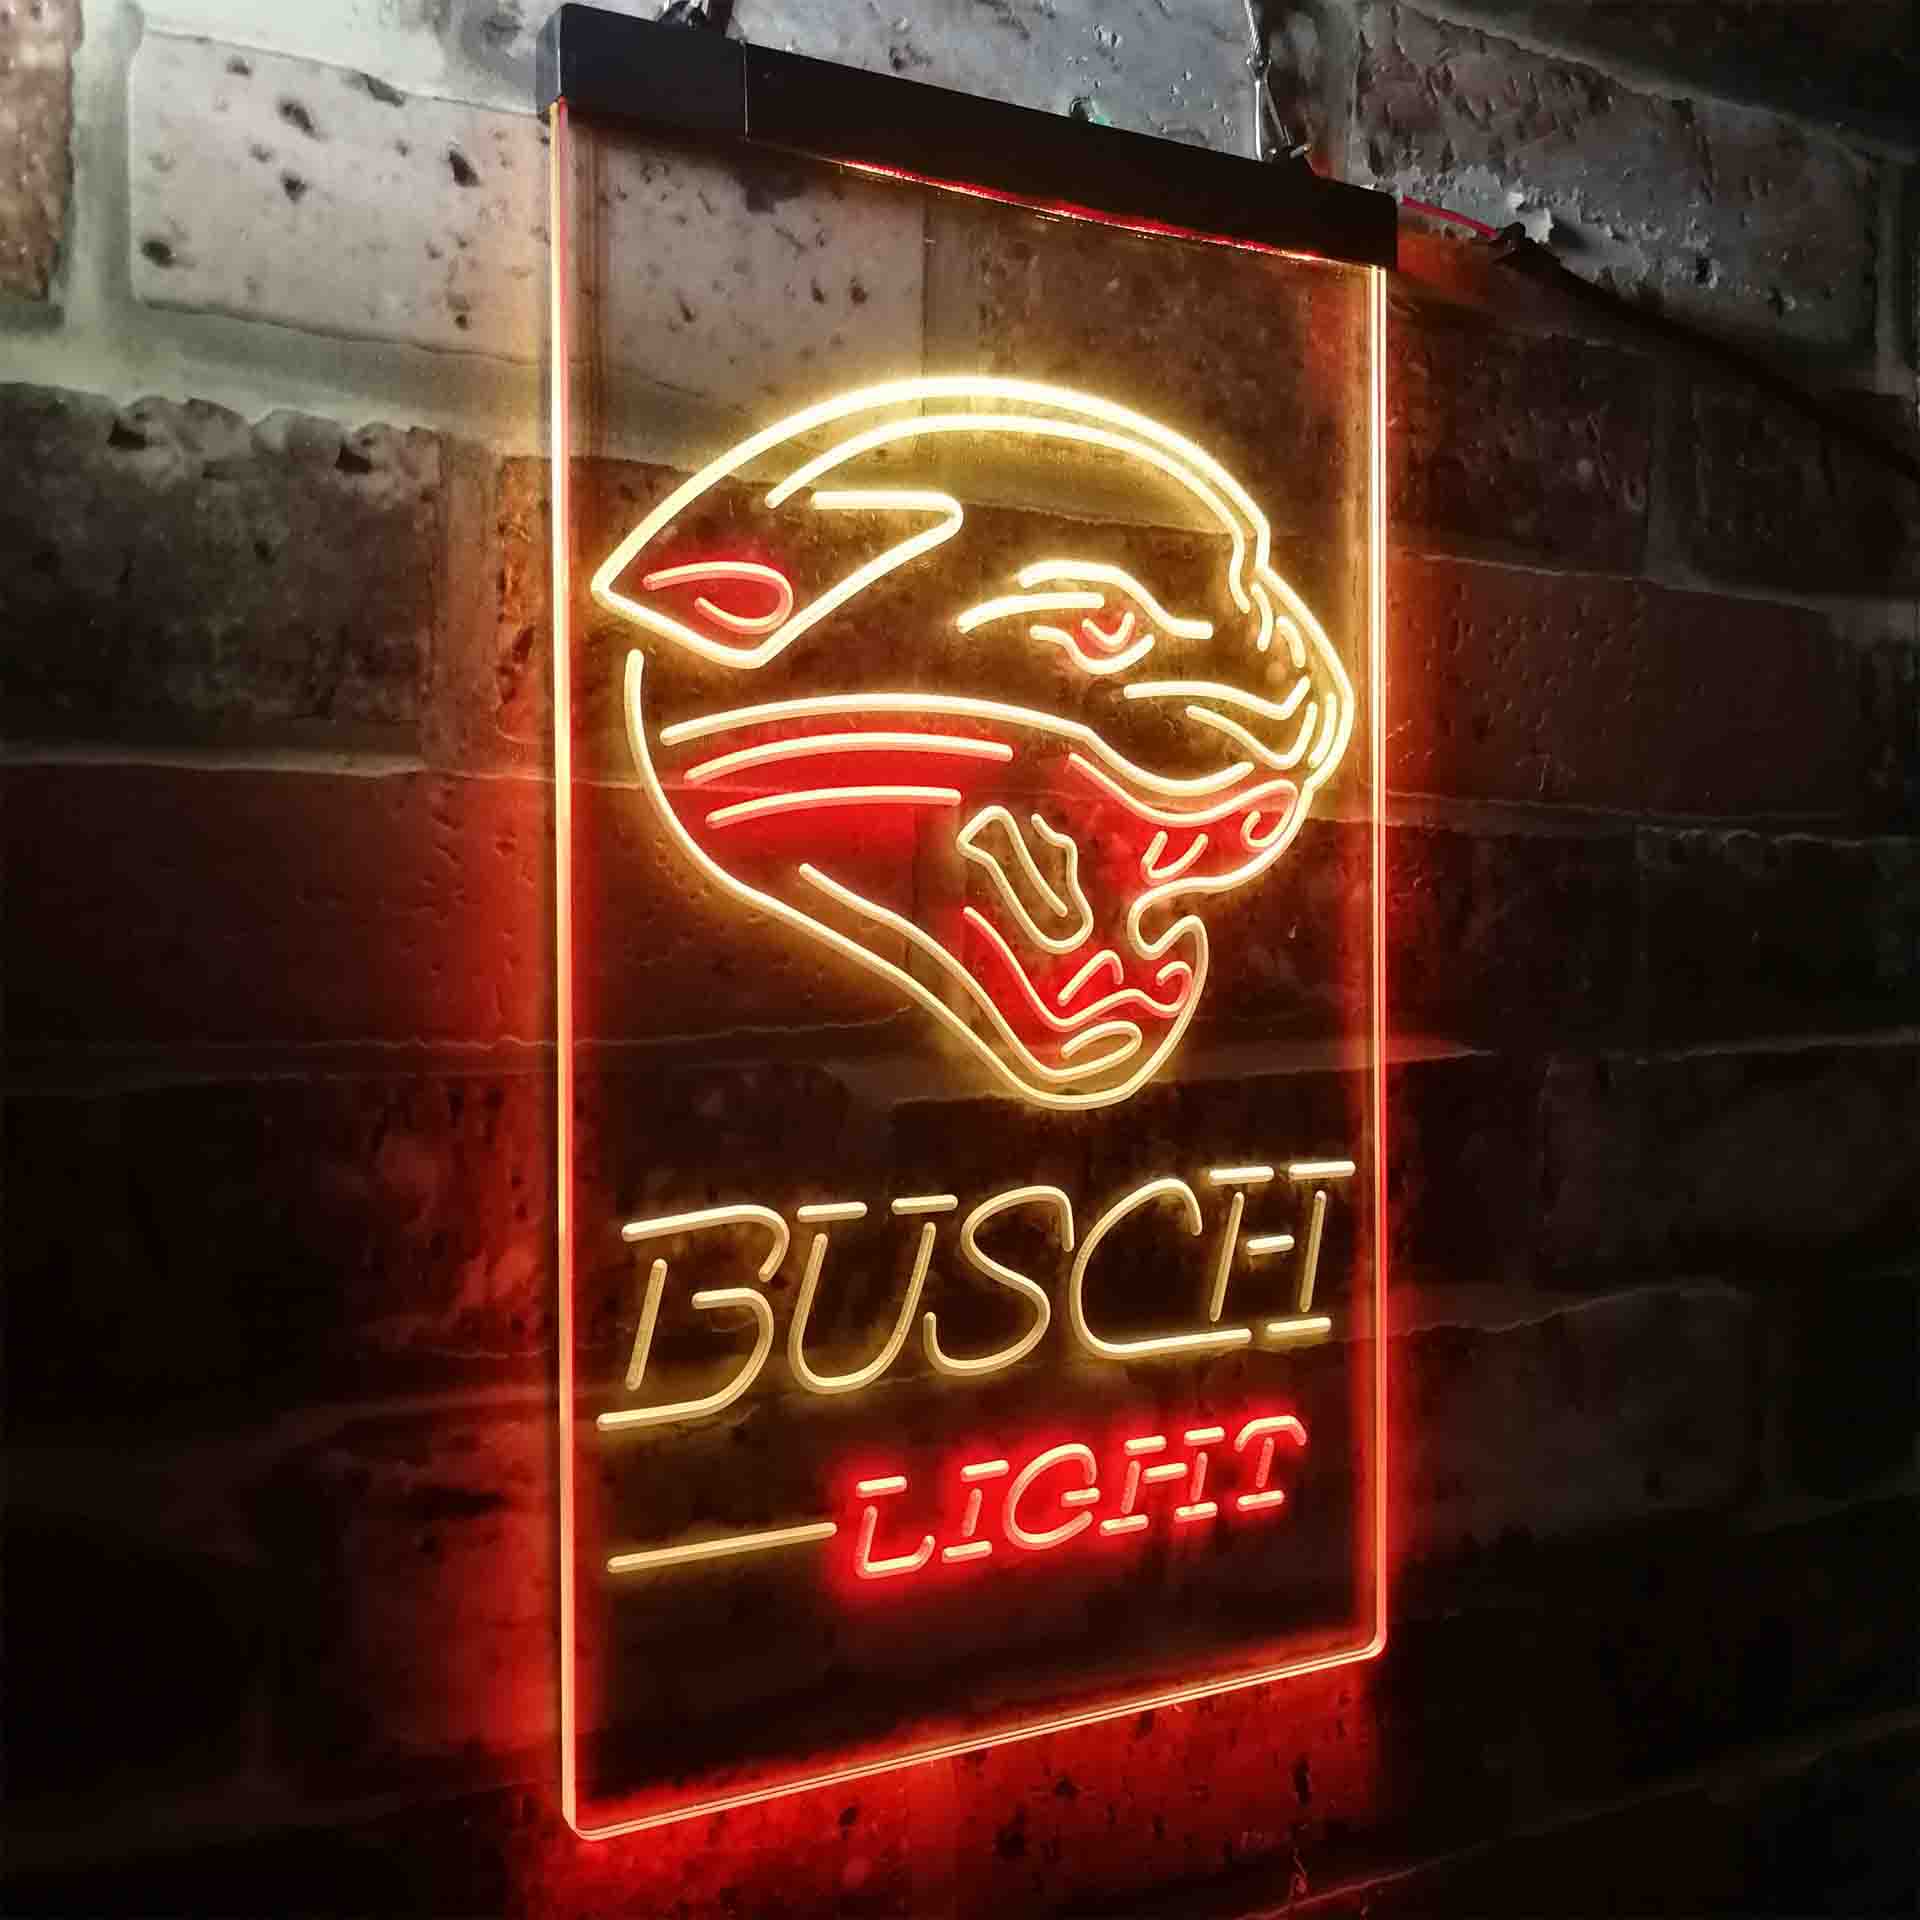 Busch Light Jacksonville Jaguars Neon-Like LED Sign